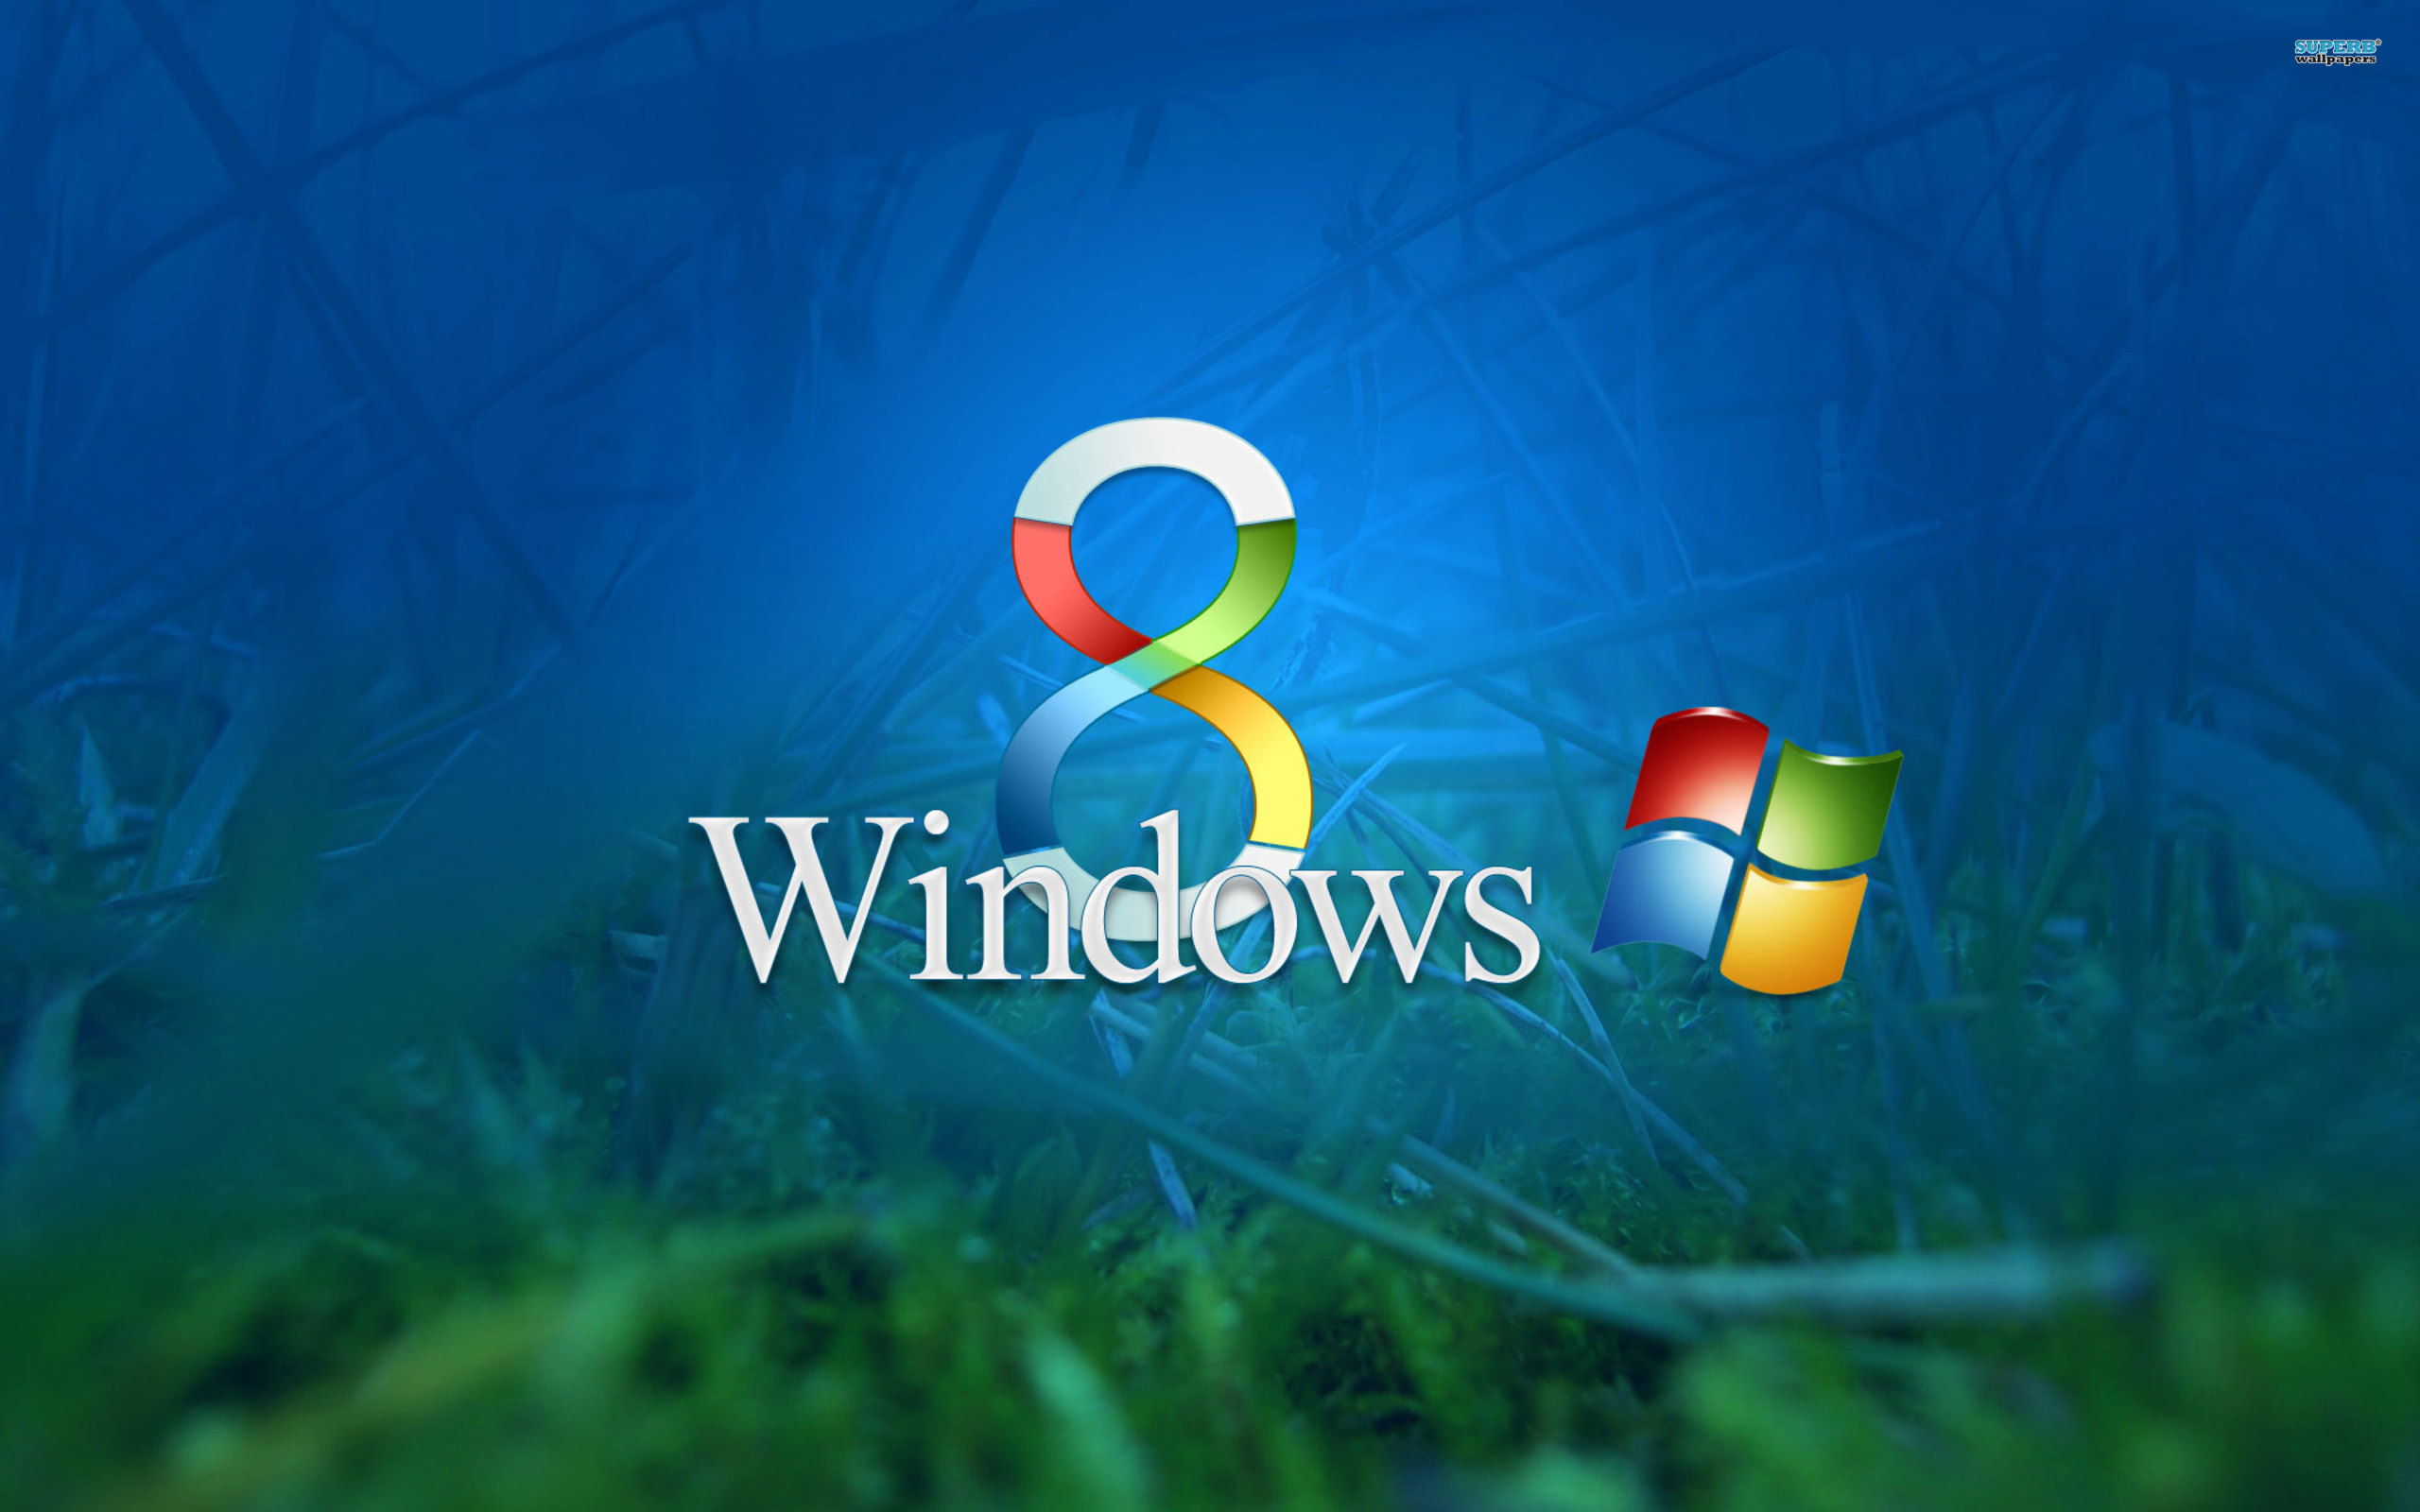 windows, technology, windows 8, microsoft